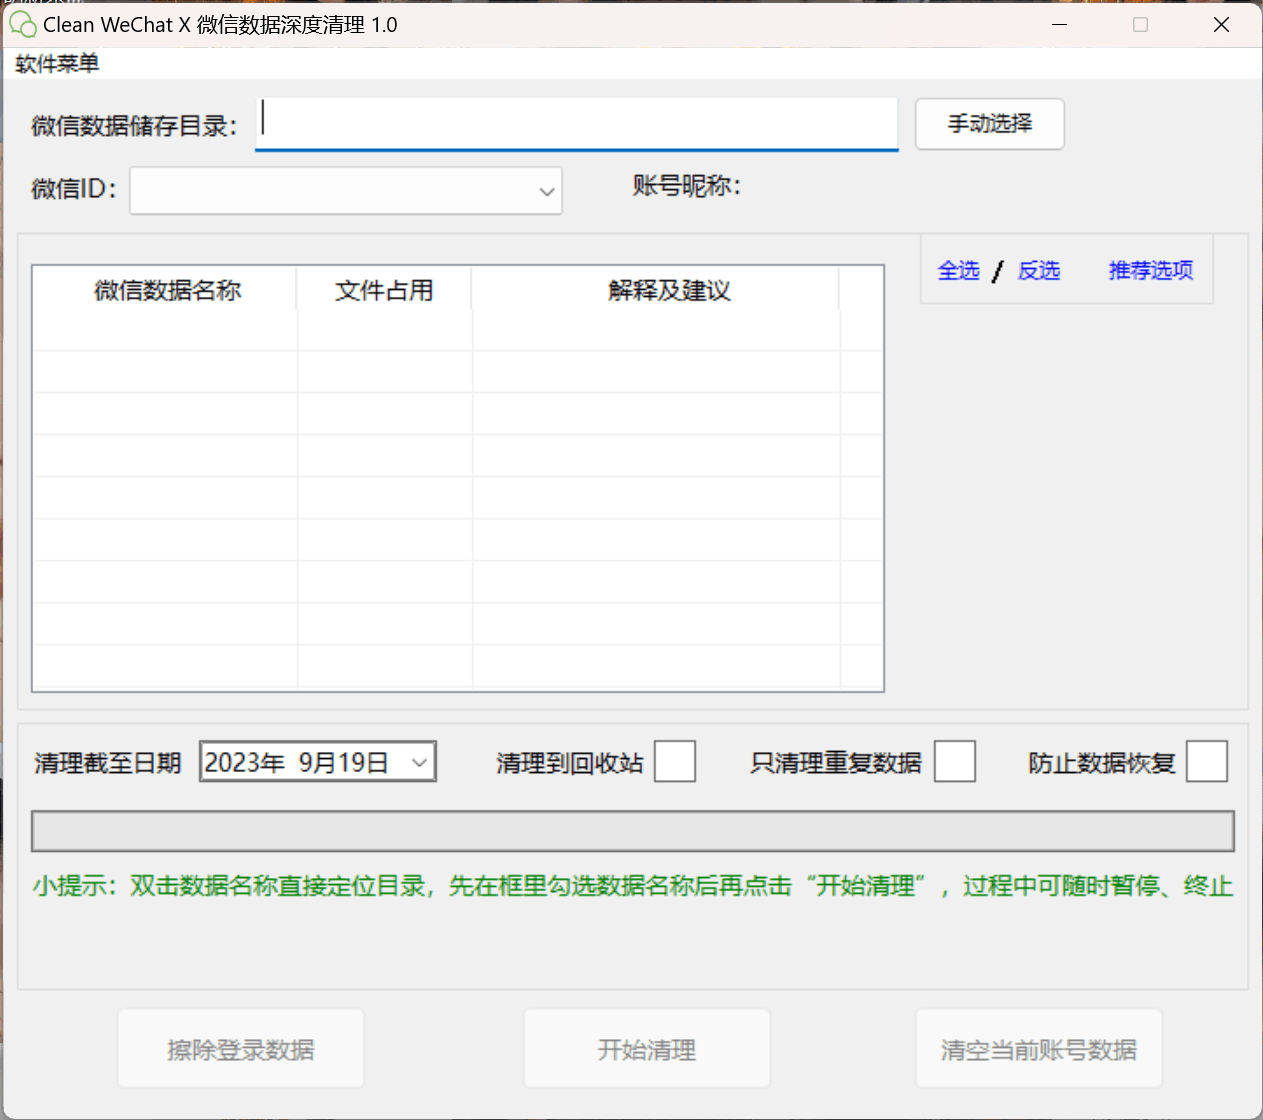 Clean WeChat X 微信数据深度清理v1.0 便携版